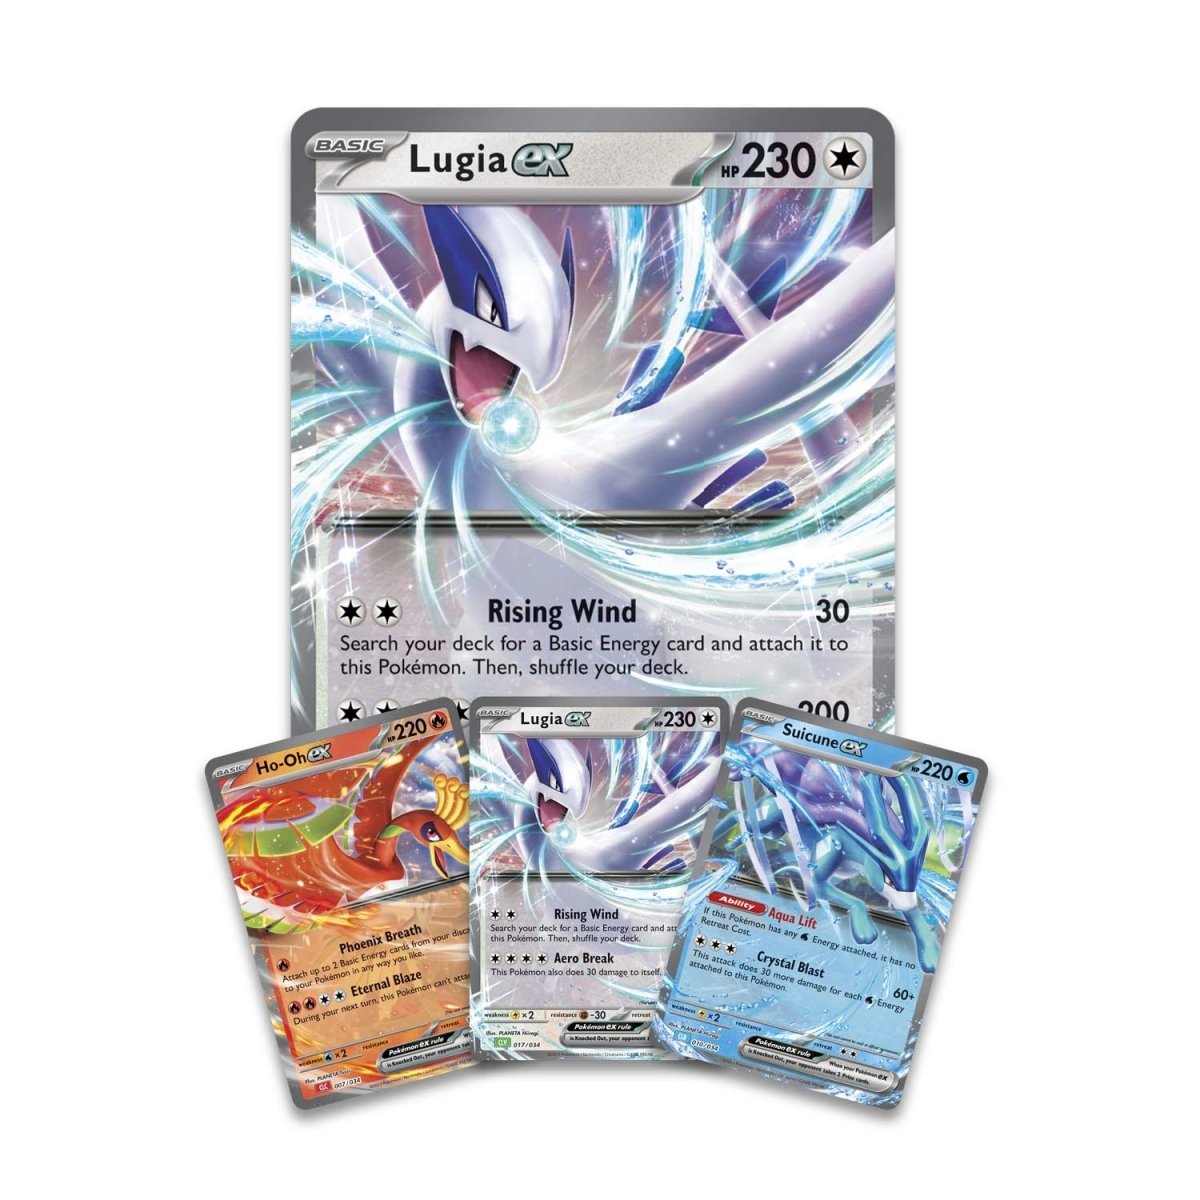 Pokémon Trading Card Game: Evolving Powers Premium Collection